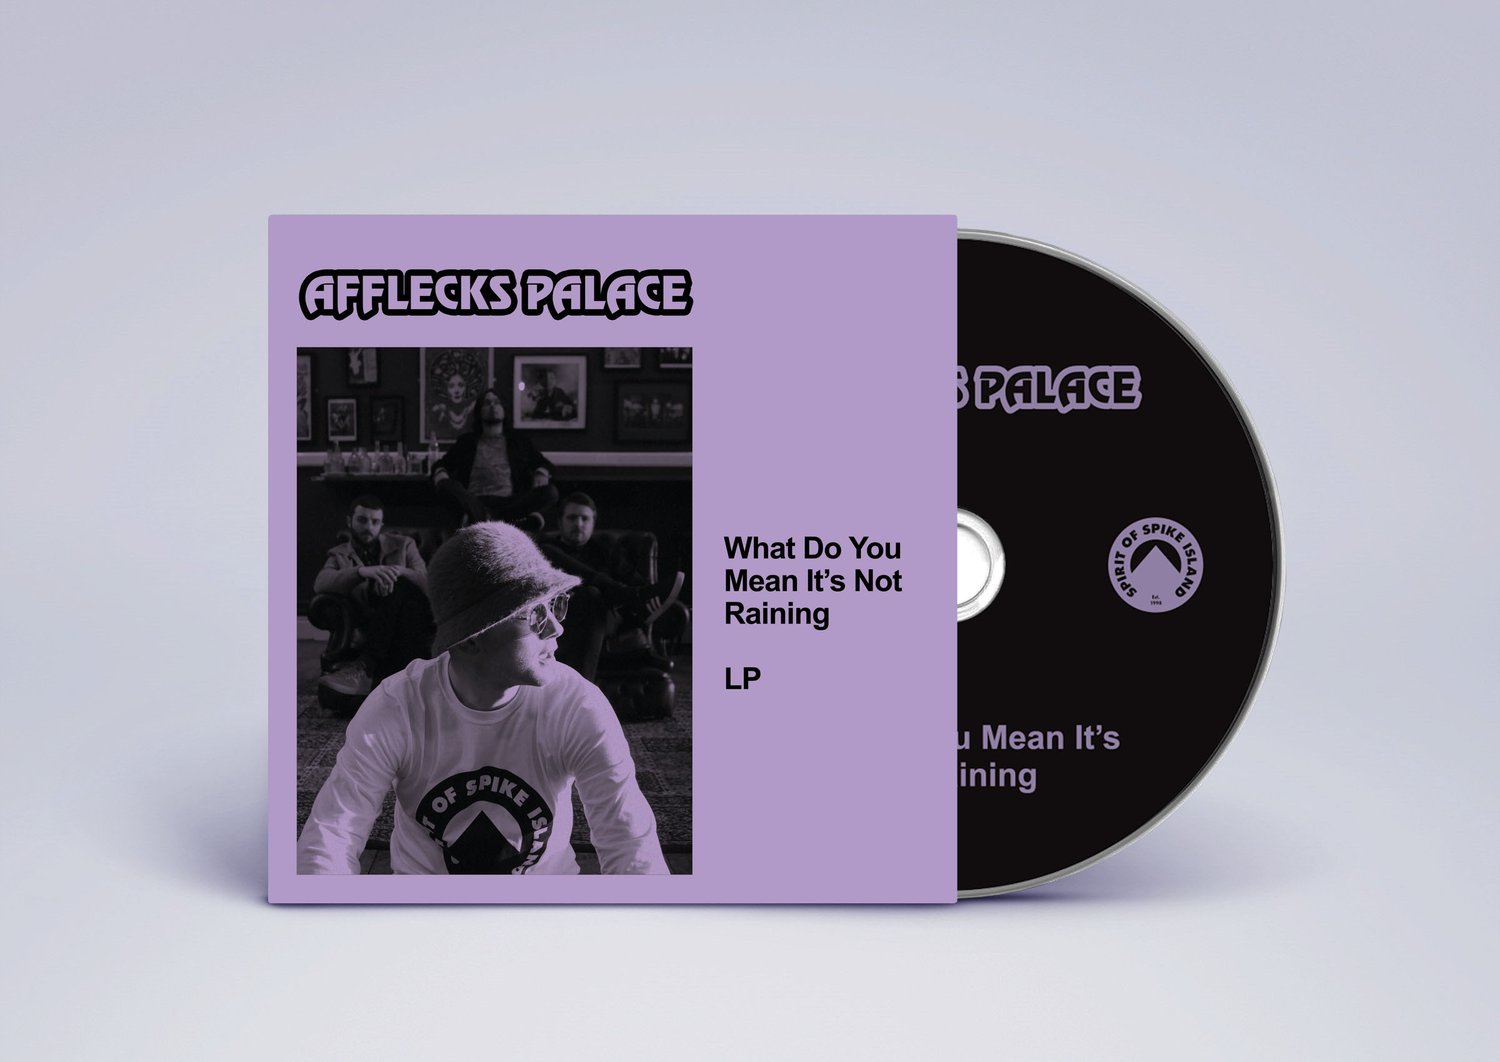 CD: Afflecks Palace - What Do You Mean Its Not Raining 